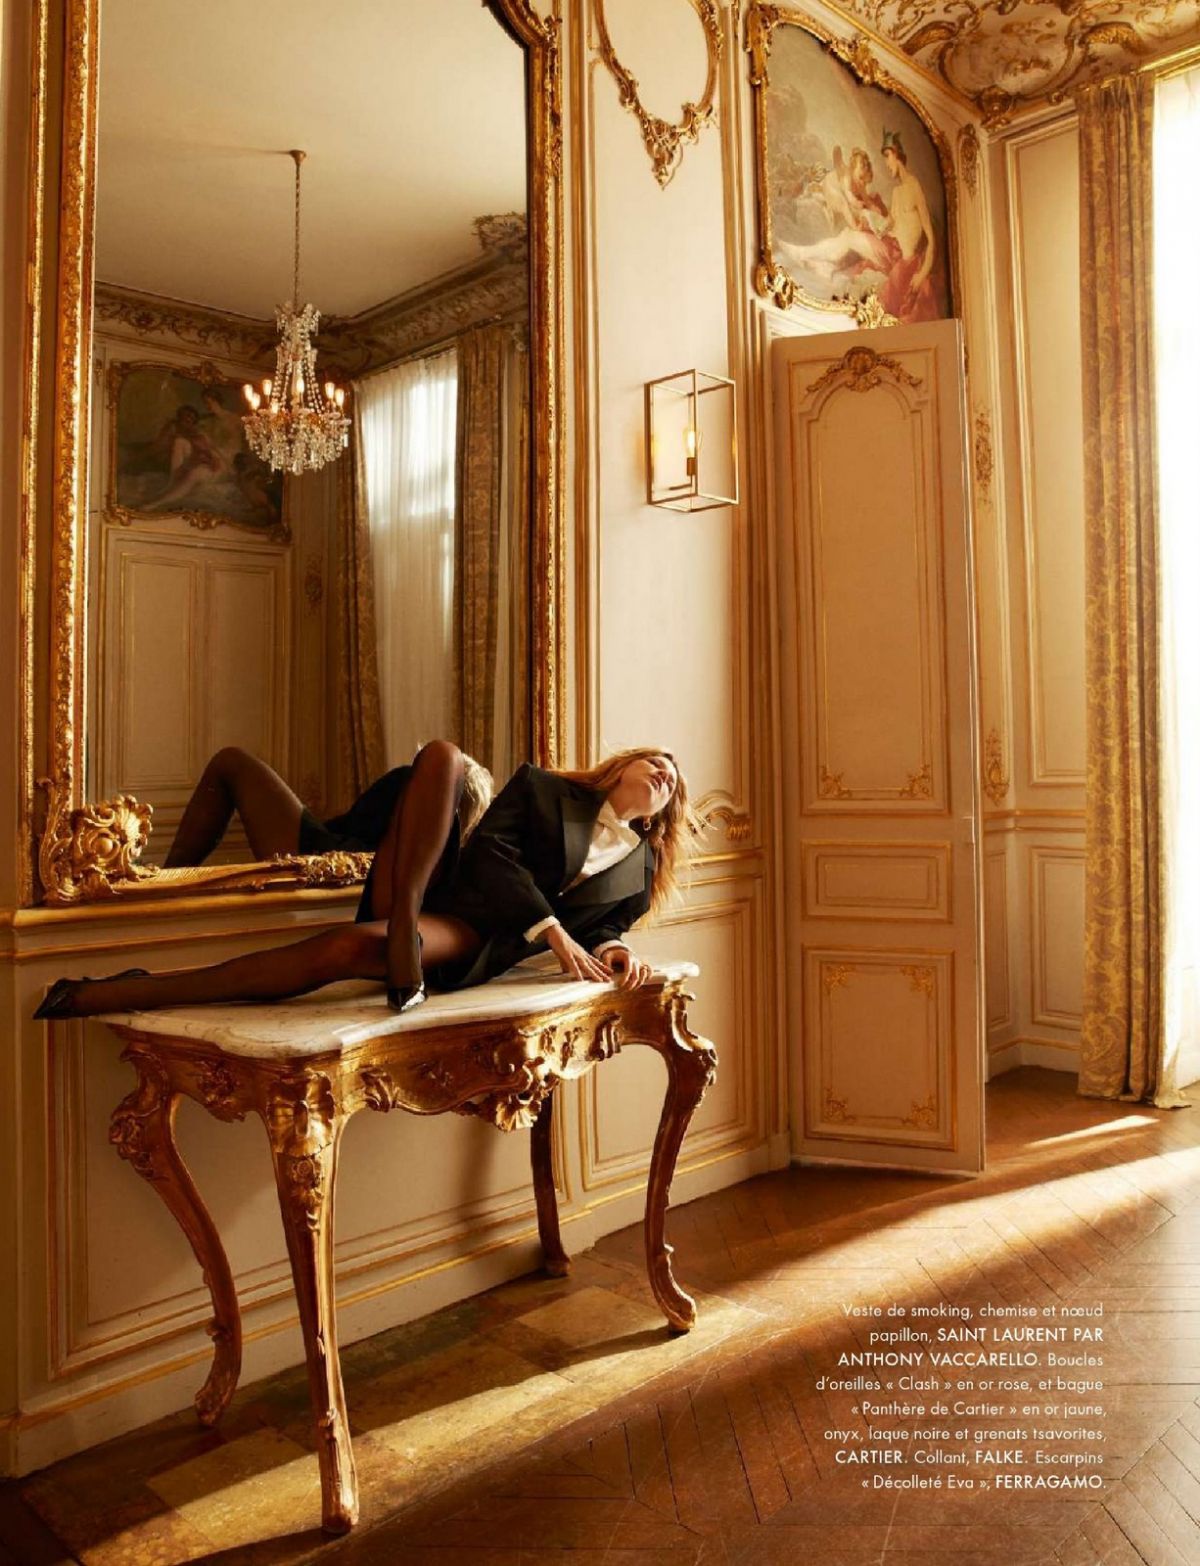 Virginie Efira exuding confidence in Elle Magazine